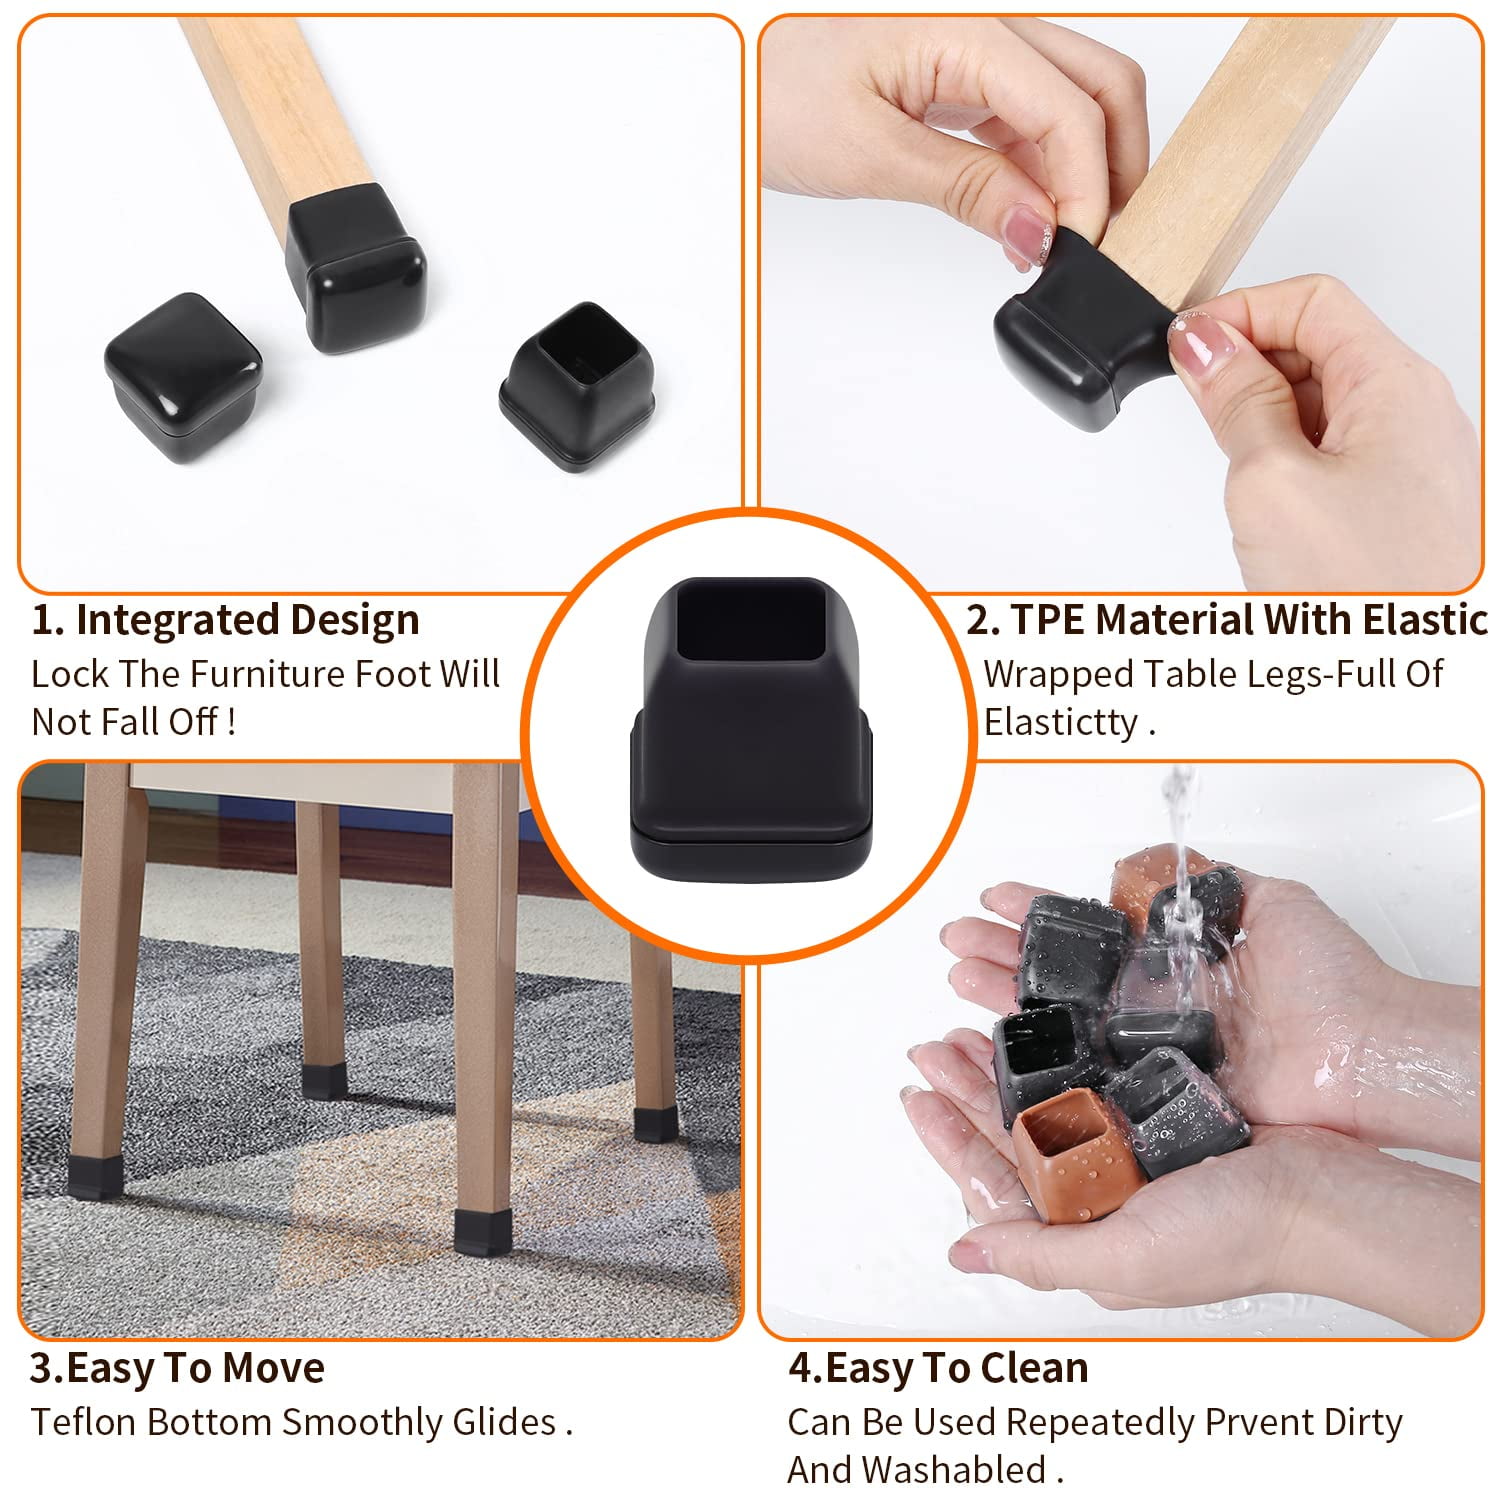 Ezprotekt 24 Pcs Chair Leg Sliders for Carpet,Clear Square Furniture  Sliders Chair Leg Protectors 